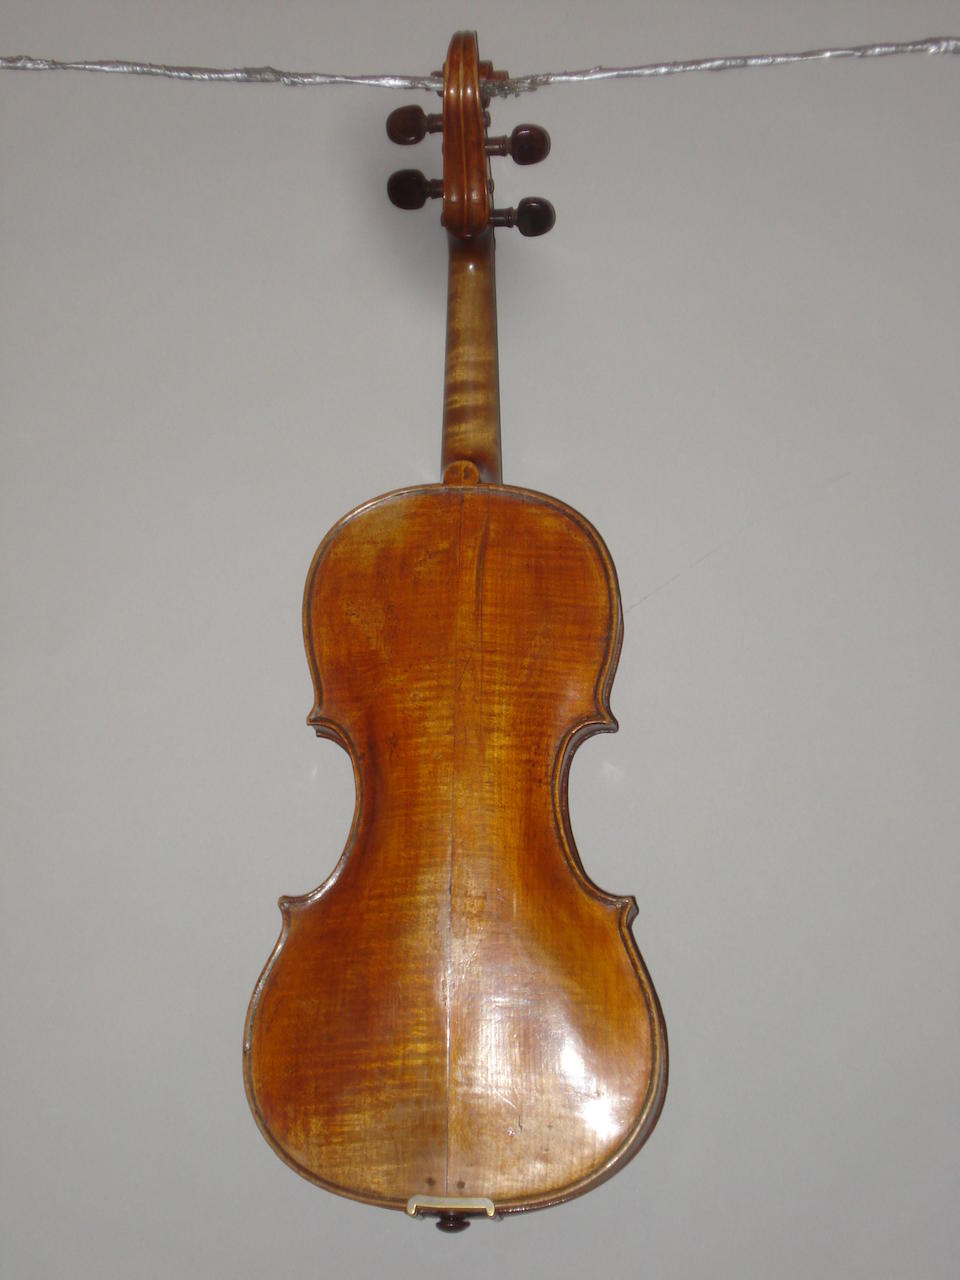 An interesting Violin, circa 1830